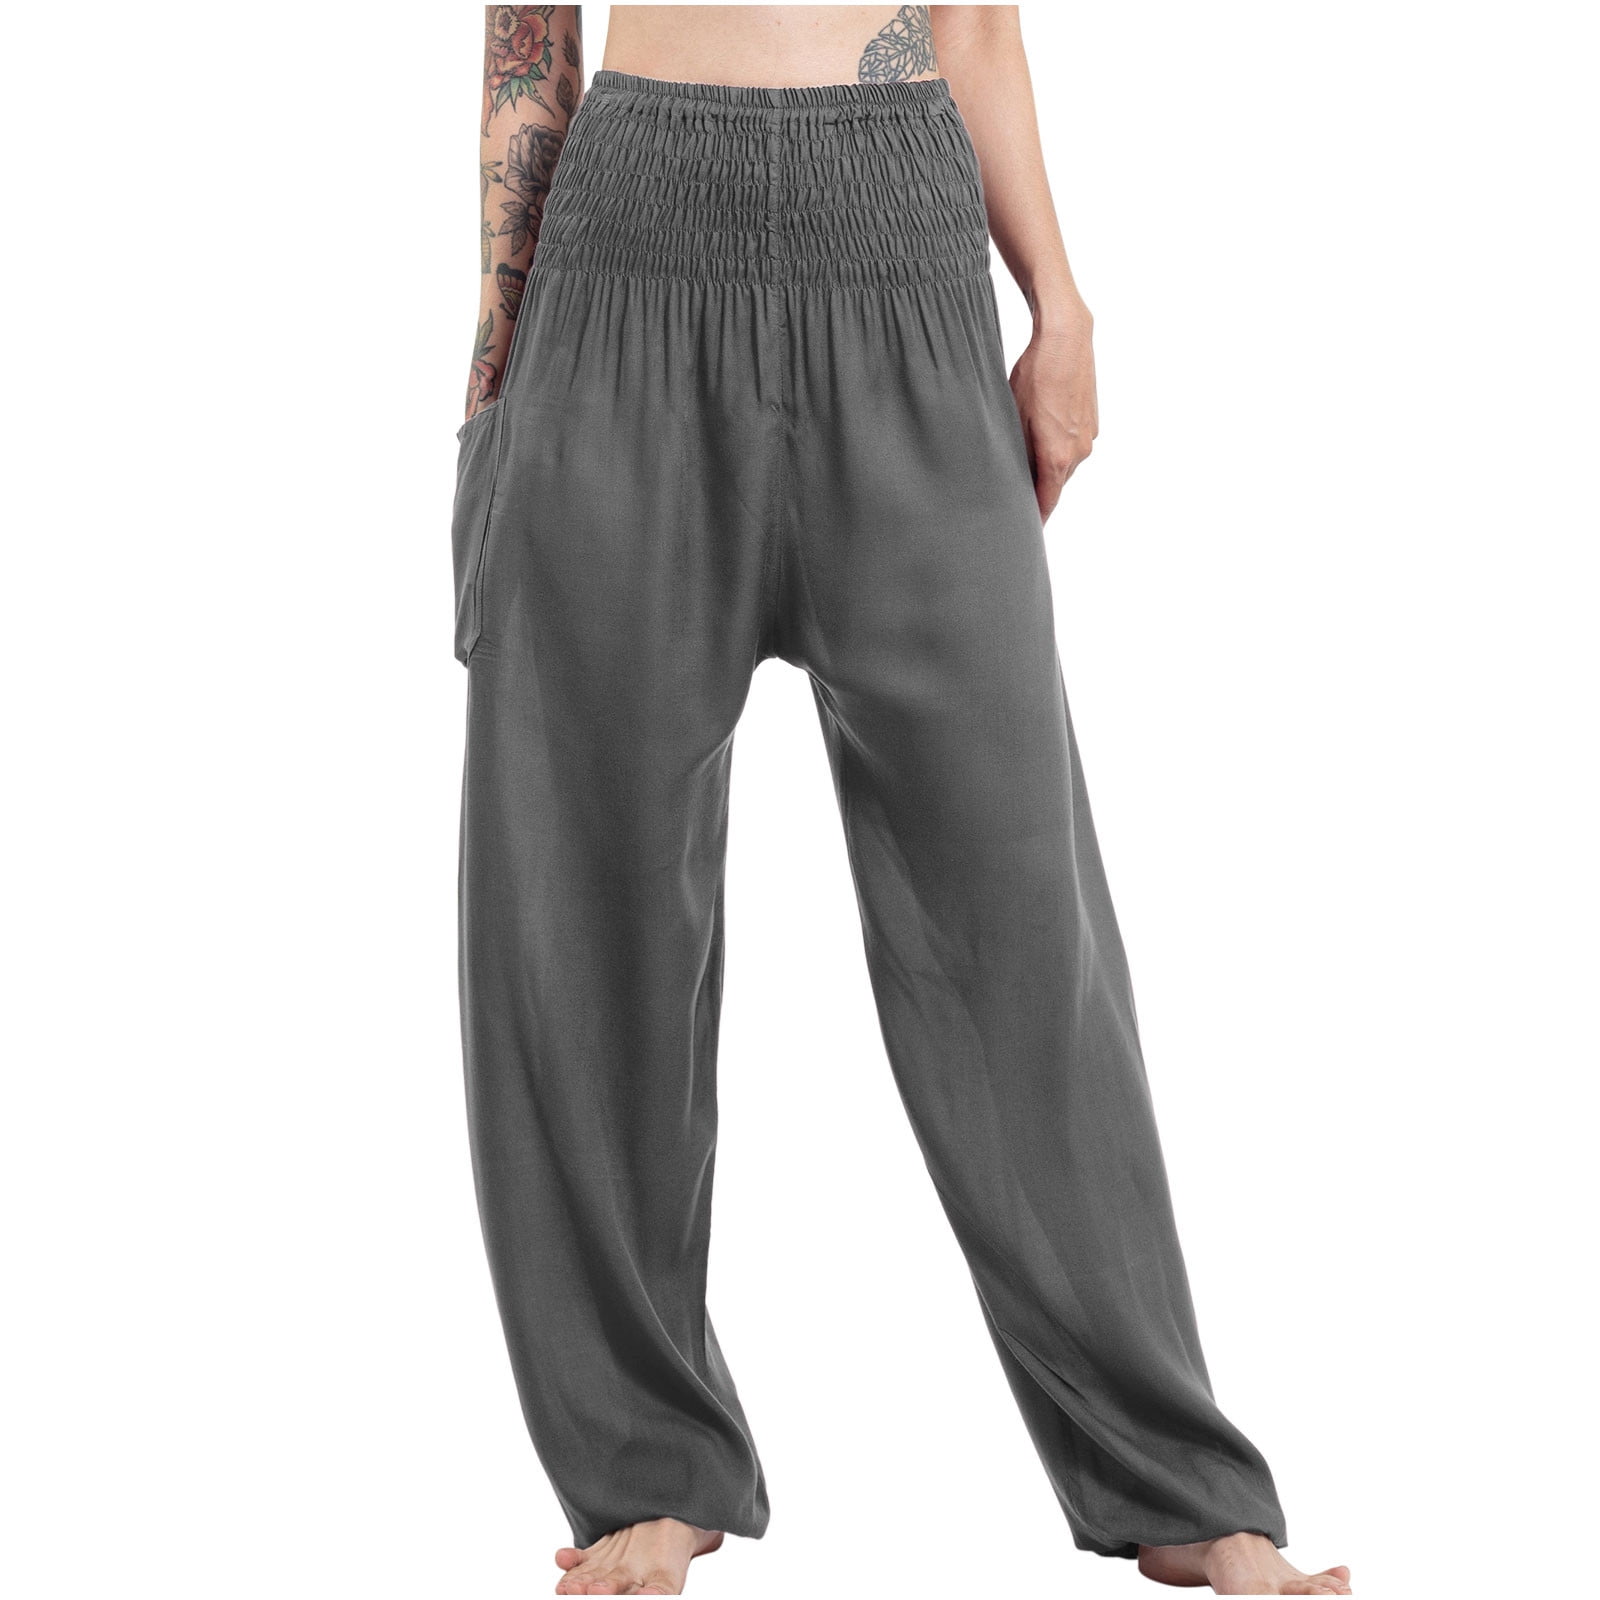 Olyvenn Women's Summer Casual Loose Baggy Pocket Pants Fashion Playsuit ...